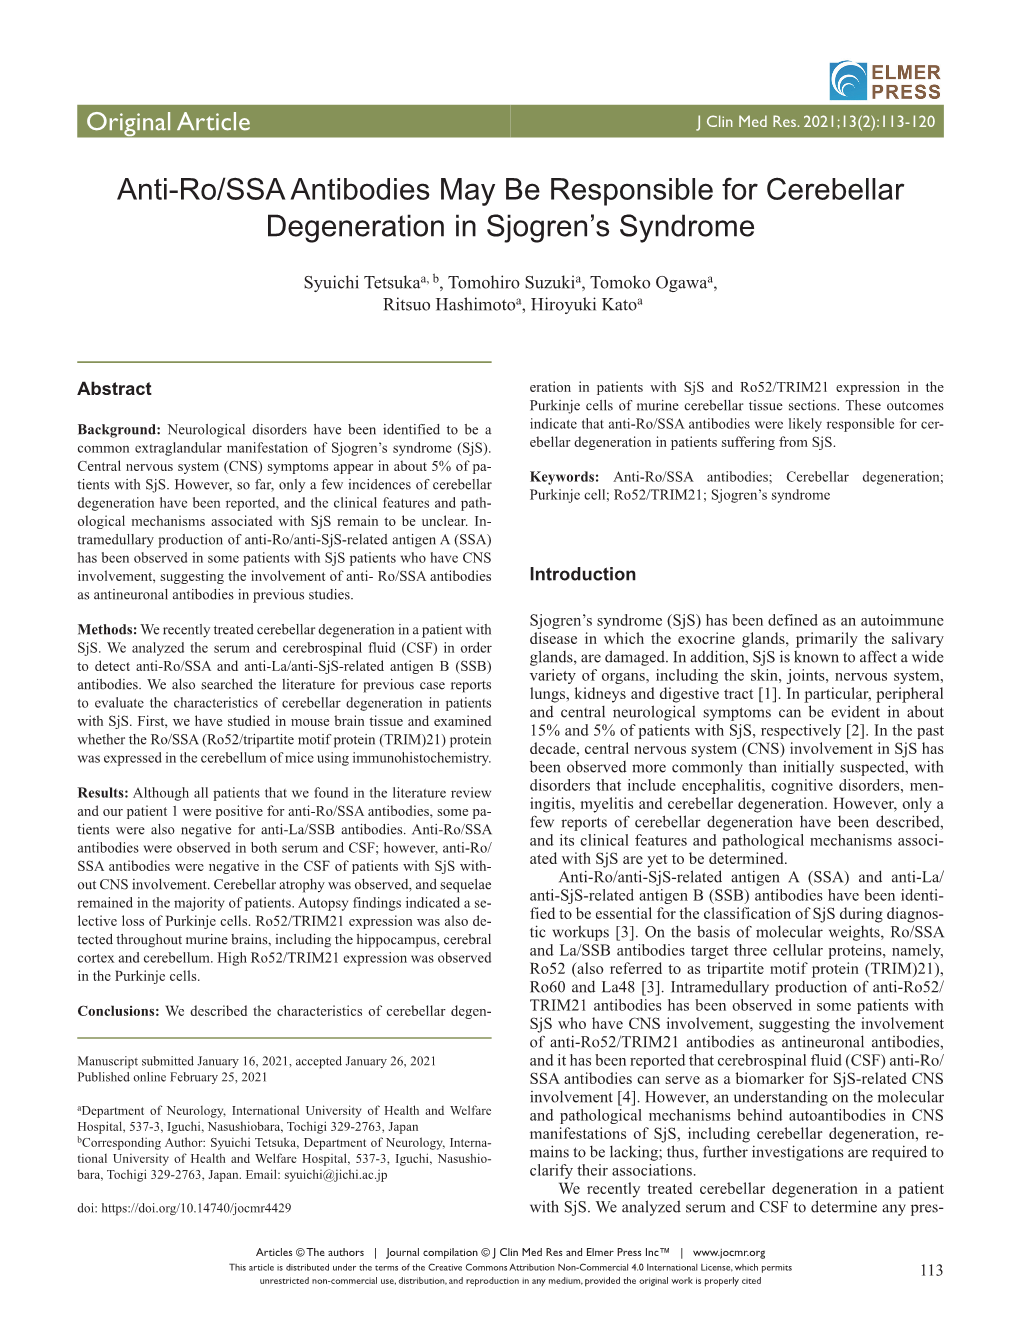 Anti-Ro/SAA Antibodies May Be Responsible for Cerebellar Degeneration in Sjogren's Syndrome